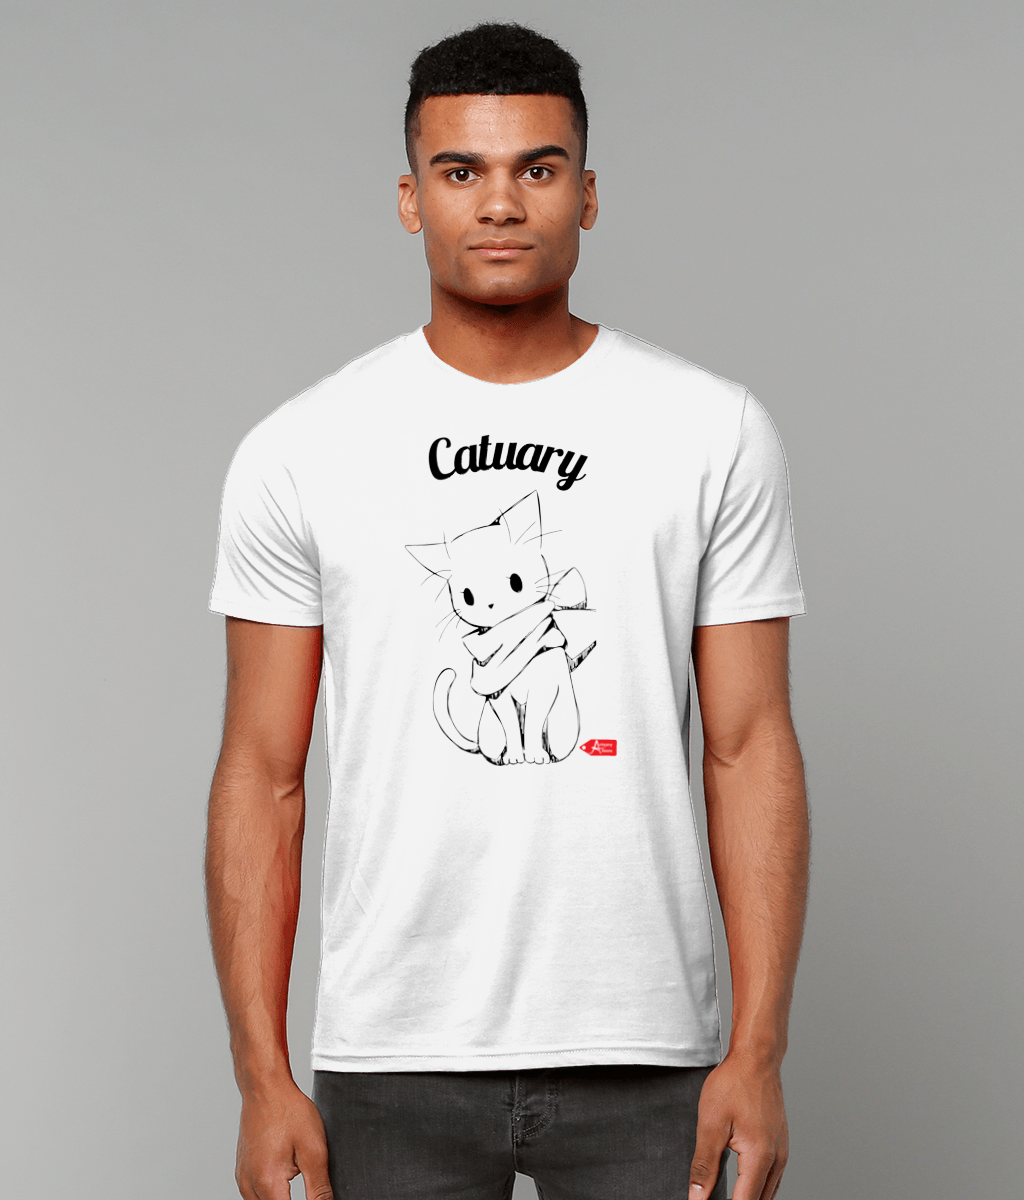 Catuary Illustration T-shirt